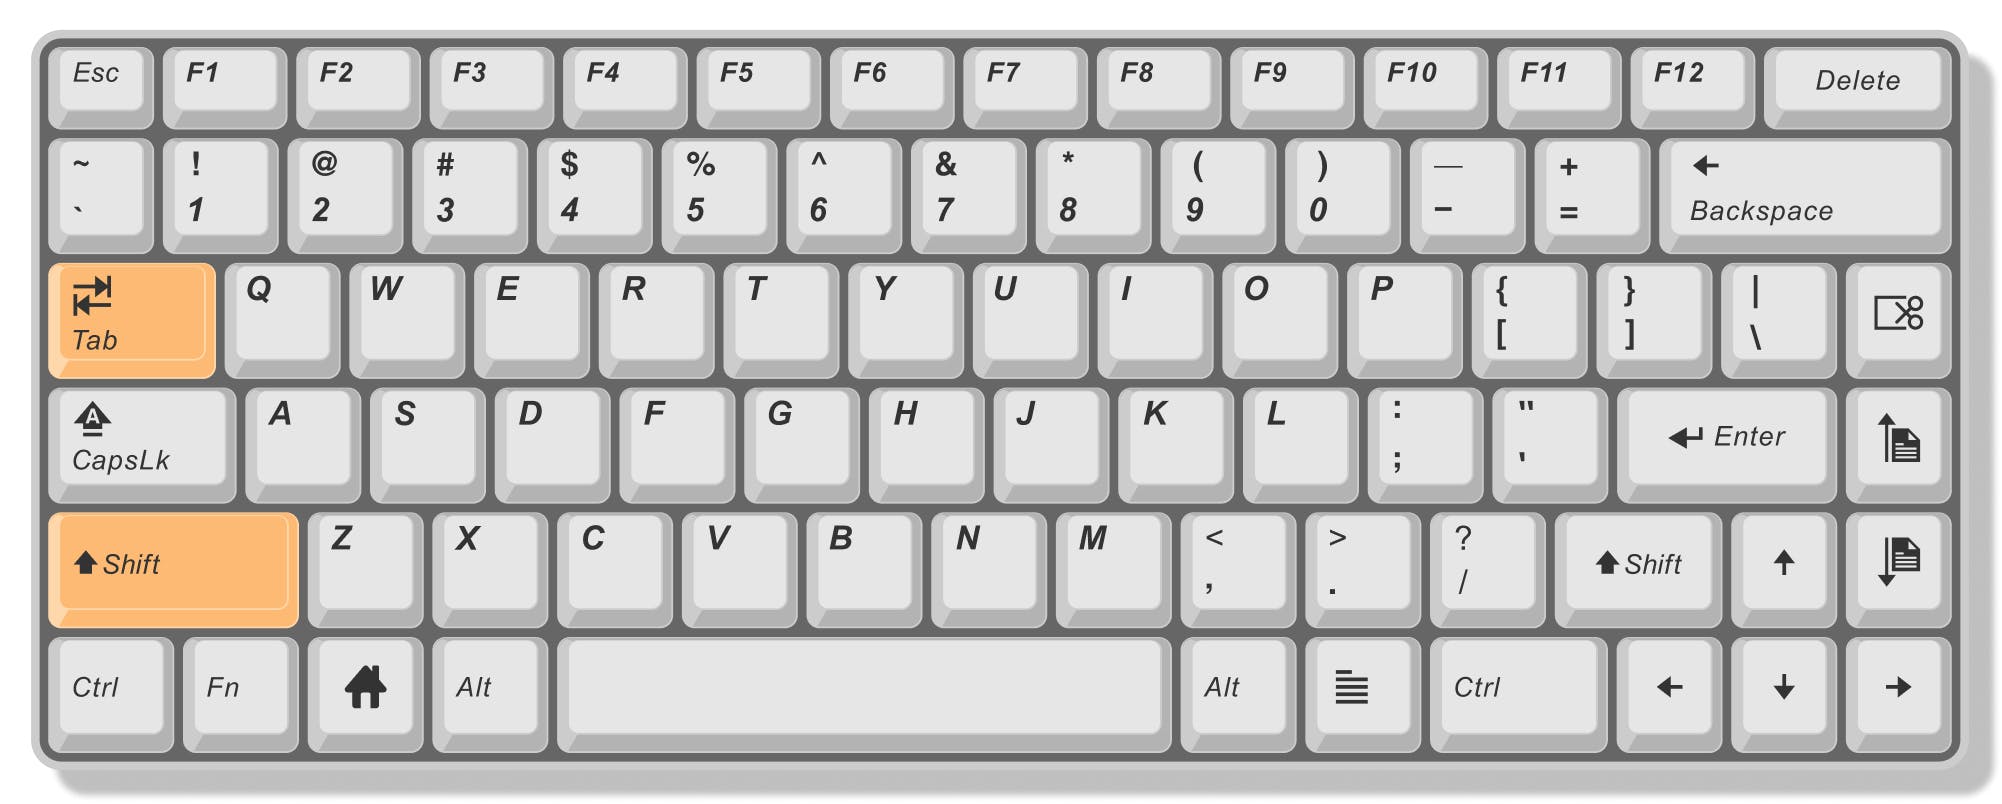 teclado_shift_tabulador.jpg